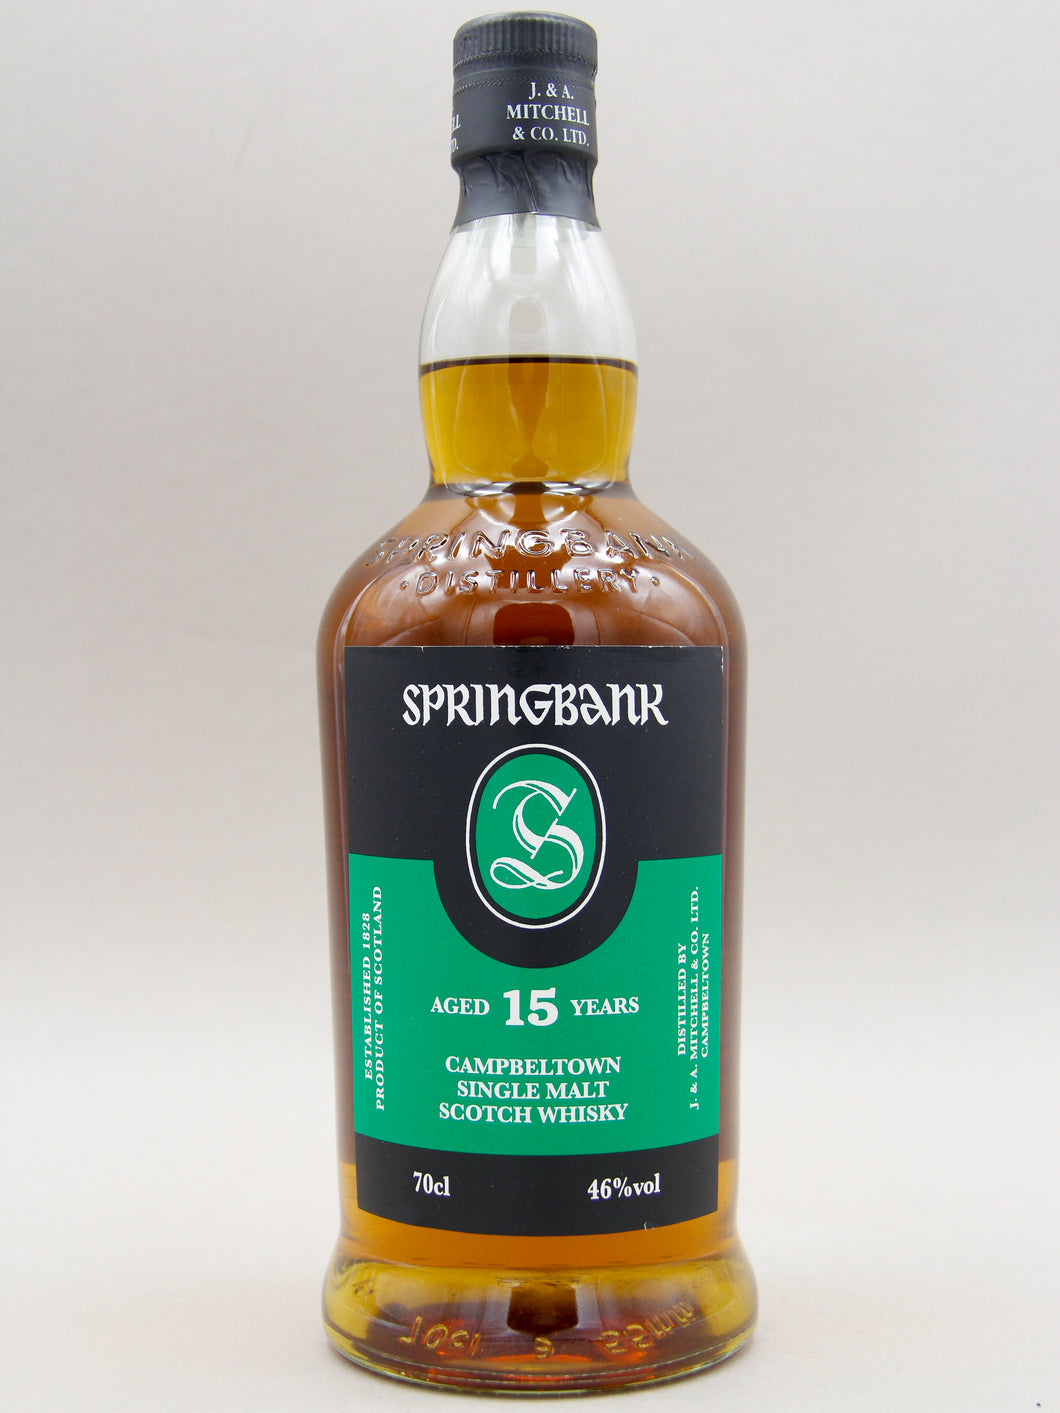 Springbank 15 Years, Campbeltown Single malt Scotch Whisky (46%, 70cl)